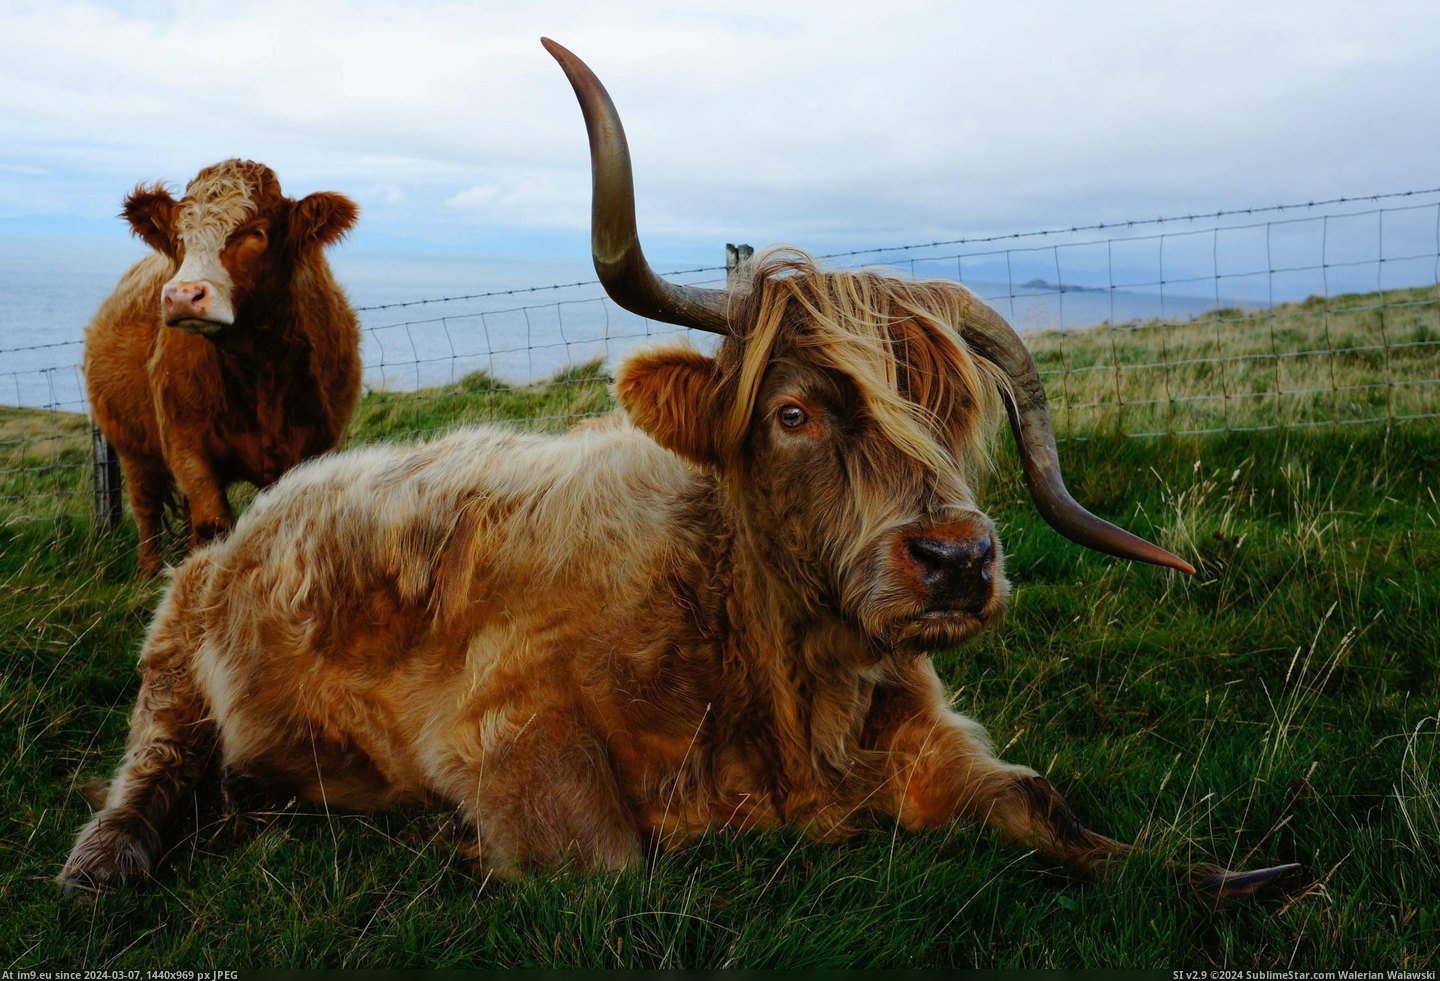 #Funny #Meet #Crazy #Kurt #Cowbain #Skye #Cow #Isle [Funny] Meet Kurt Cowbain, the crazy cow from the Isle of Skye. Pic. (Obraz z album My r/FUNNY favs))